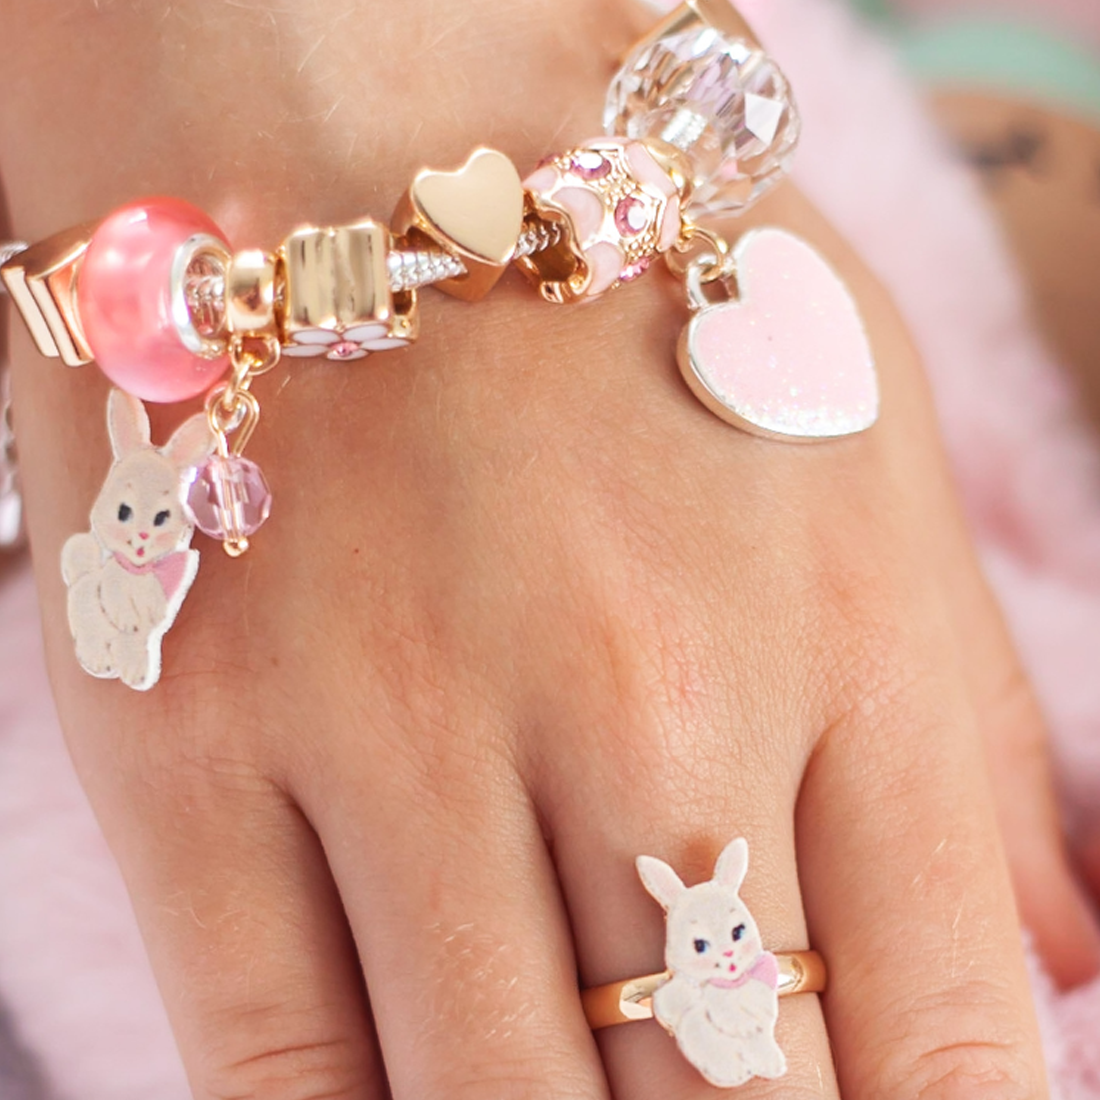 Floral Dreams Bunny Charm Bracelet by Lauren Hinkley